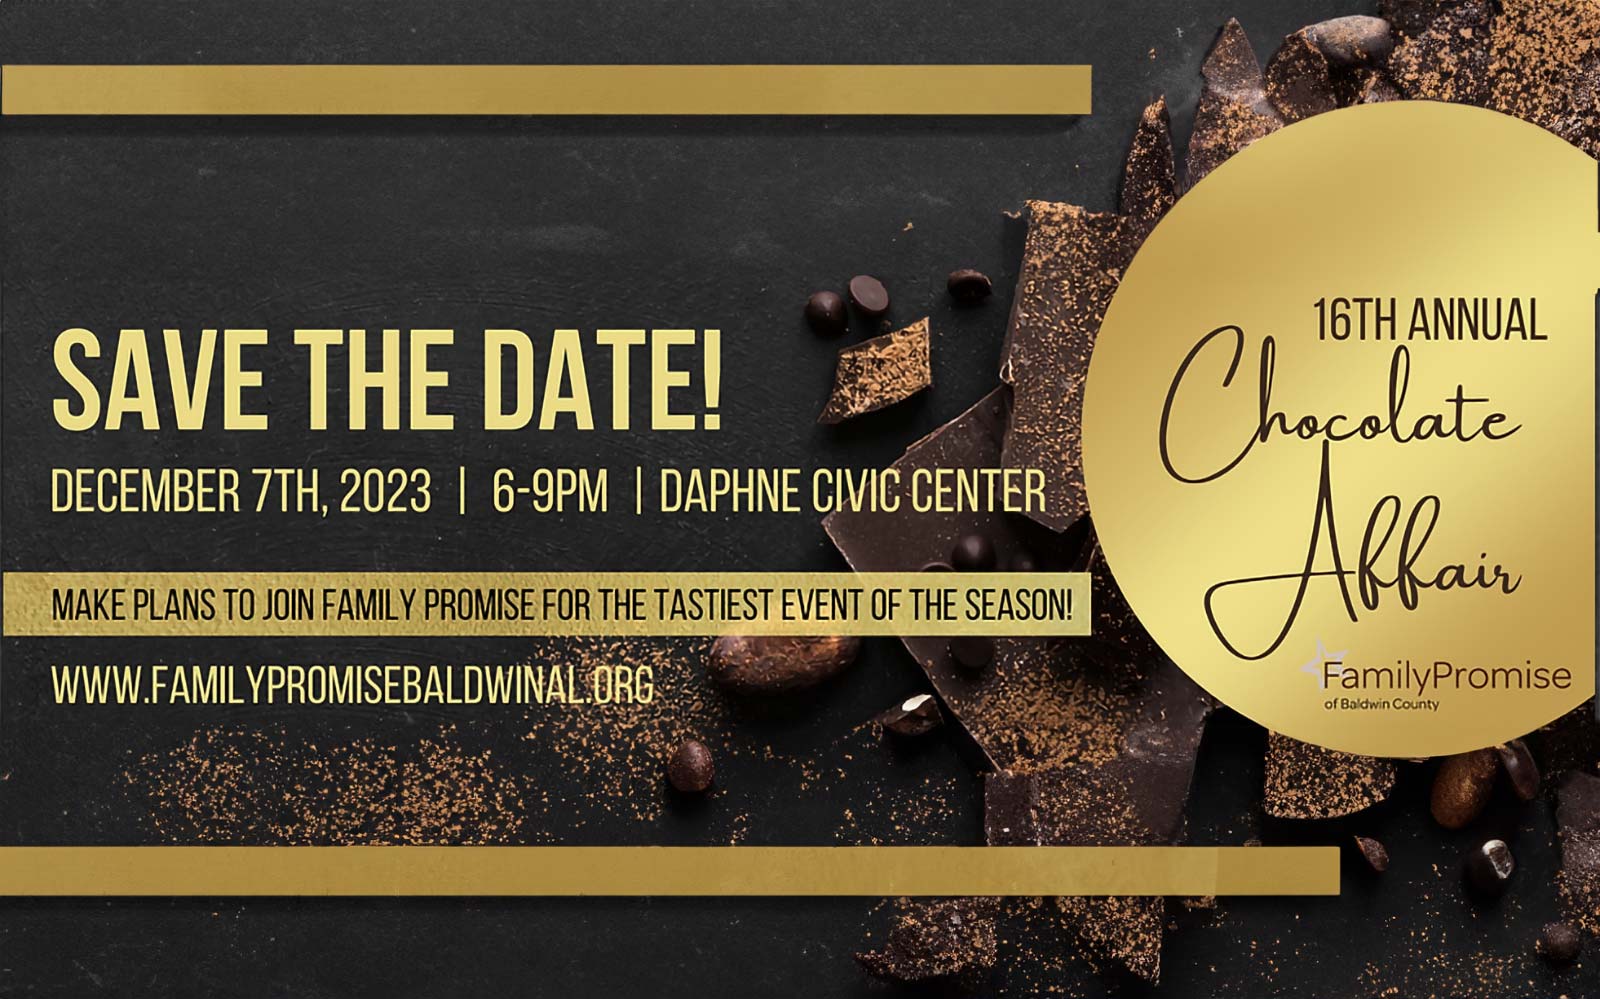 Chocolate Affair Fundraiser Coming To Daphne